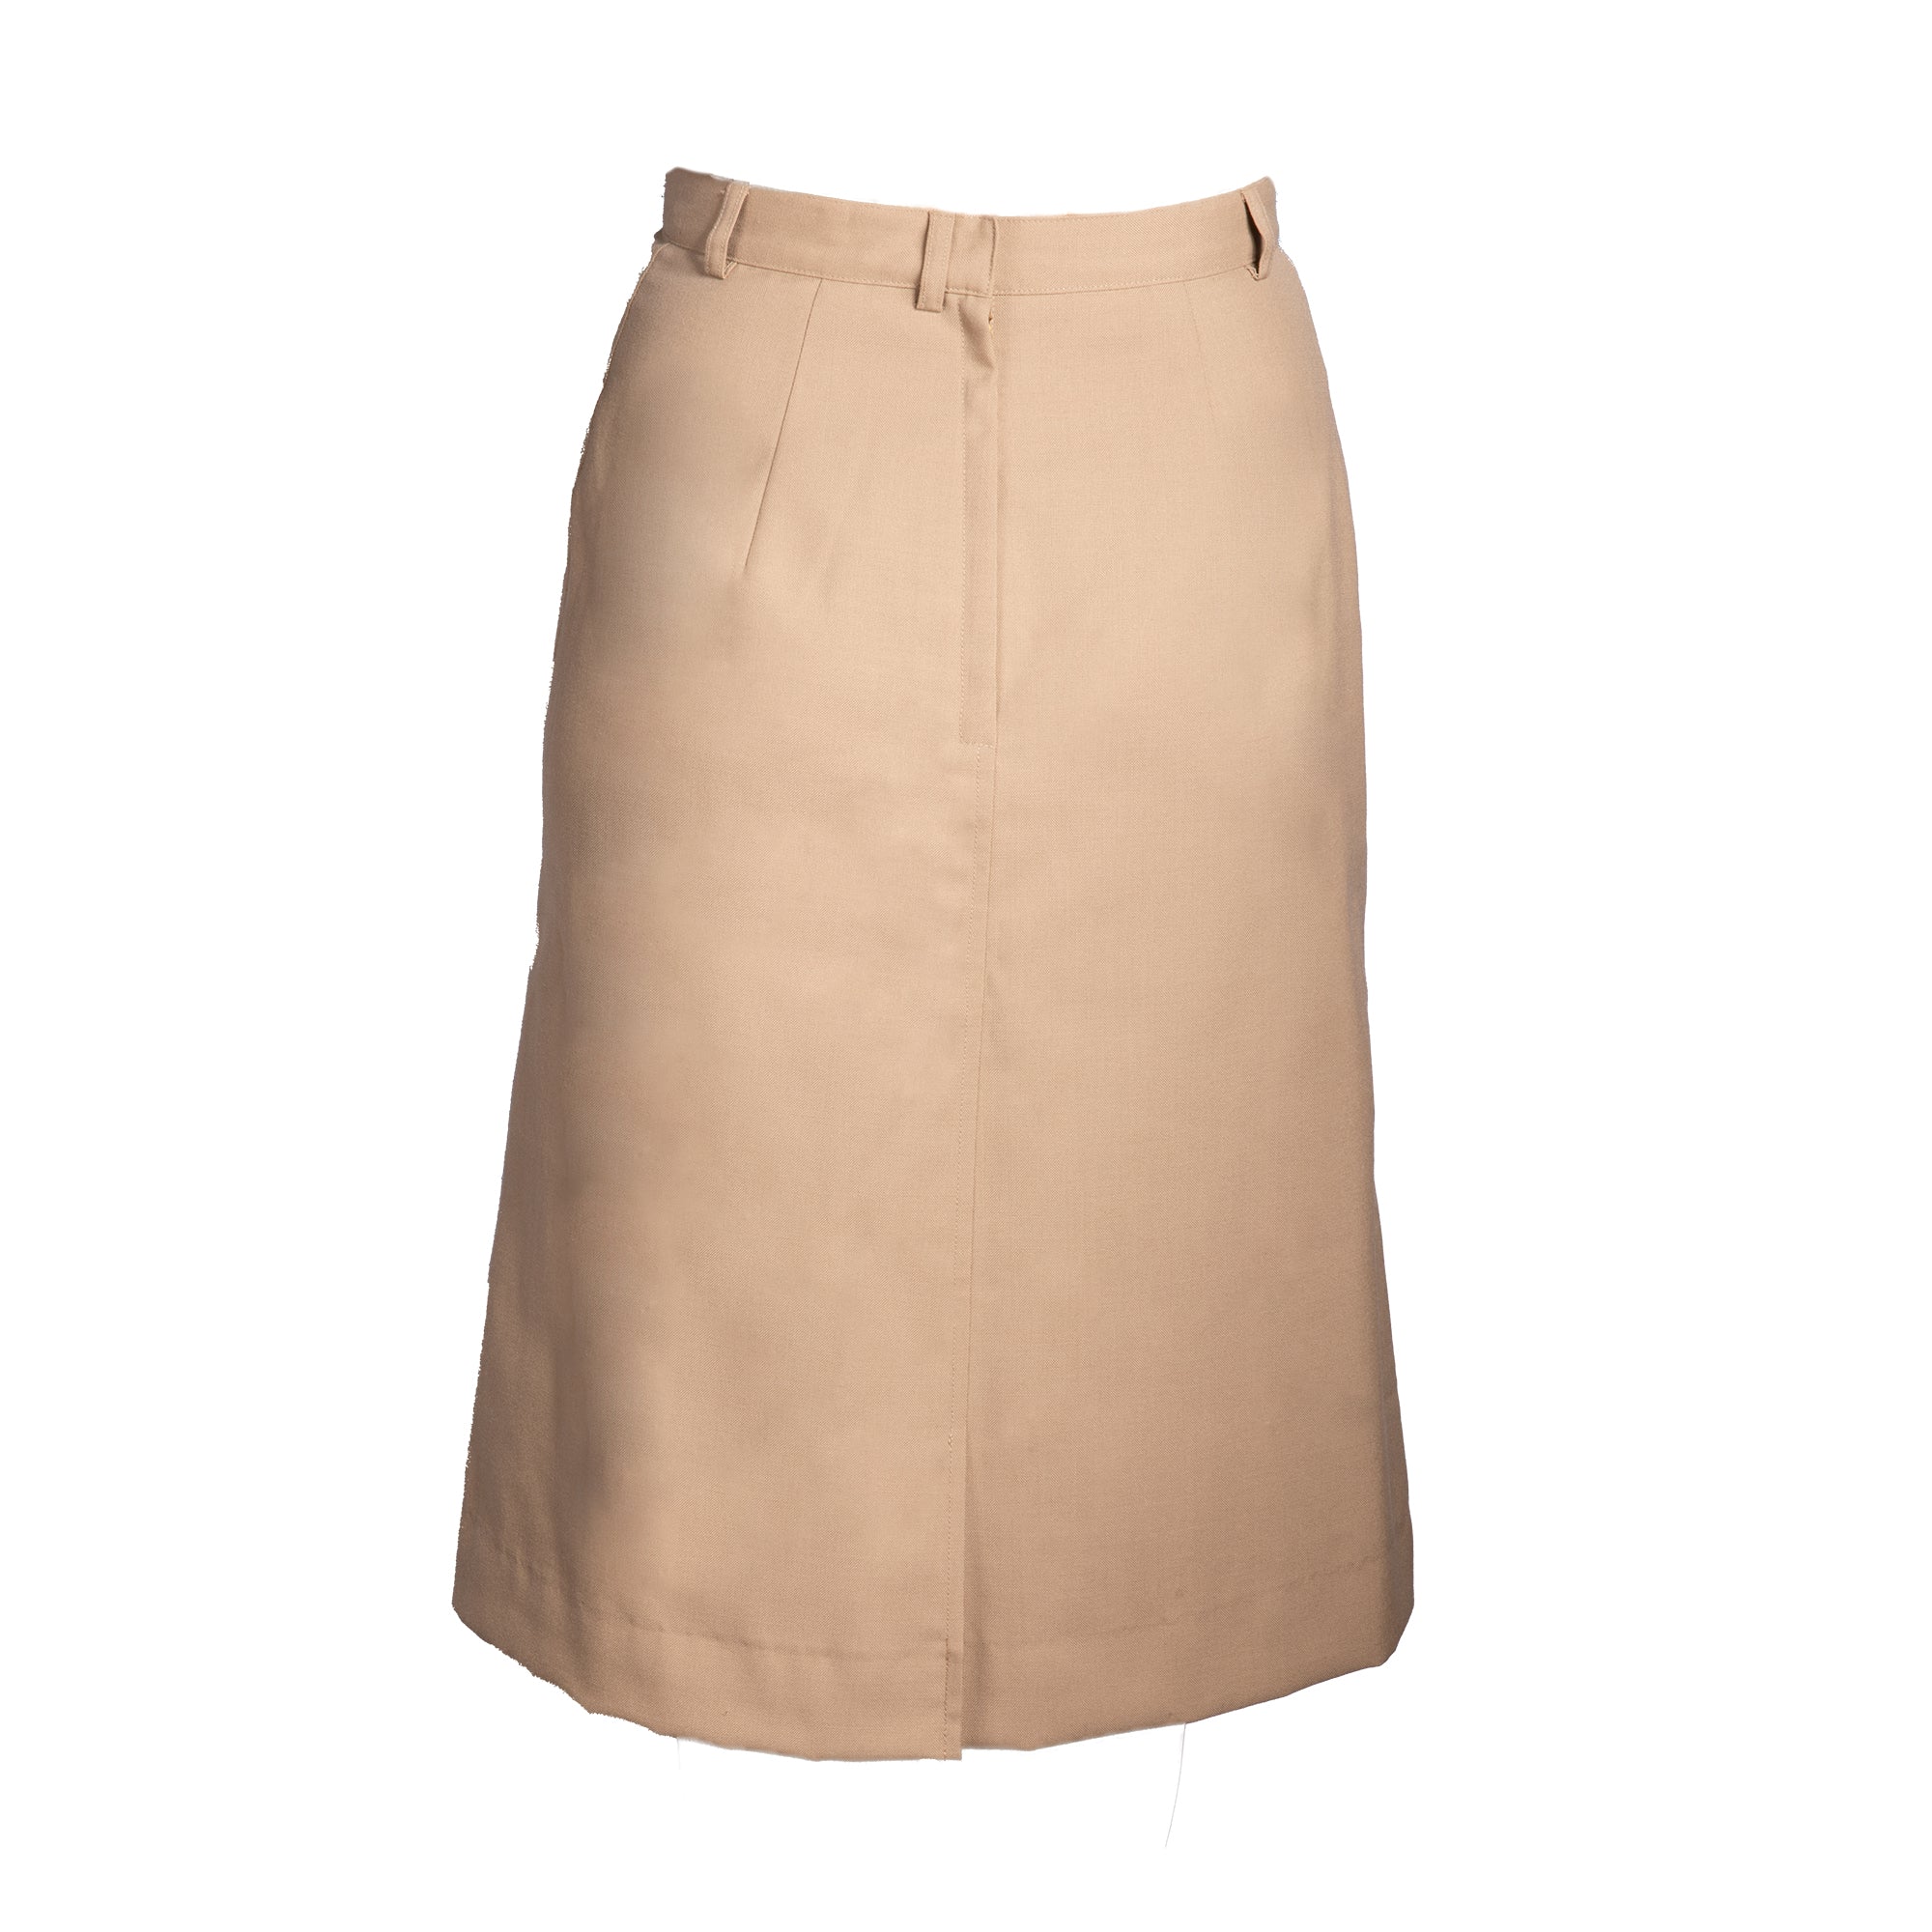 AS-IS NAVY Women's Service Skirt - Khaki P/W | Uniform Trading Company